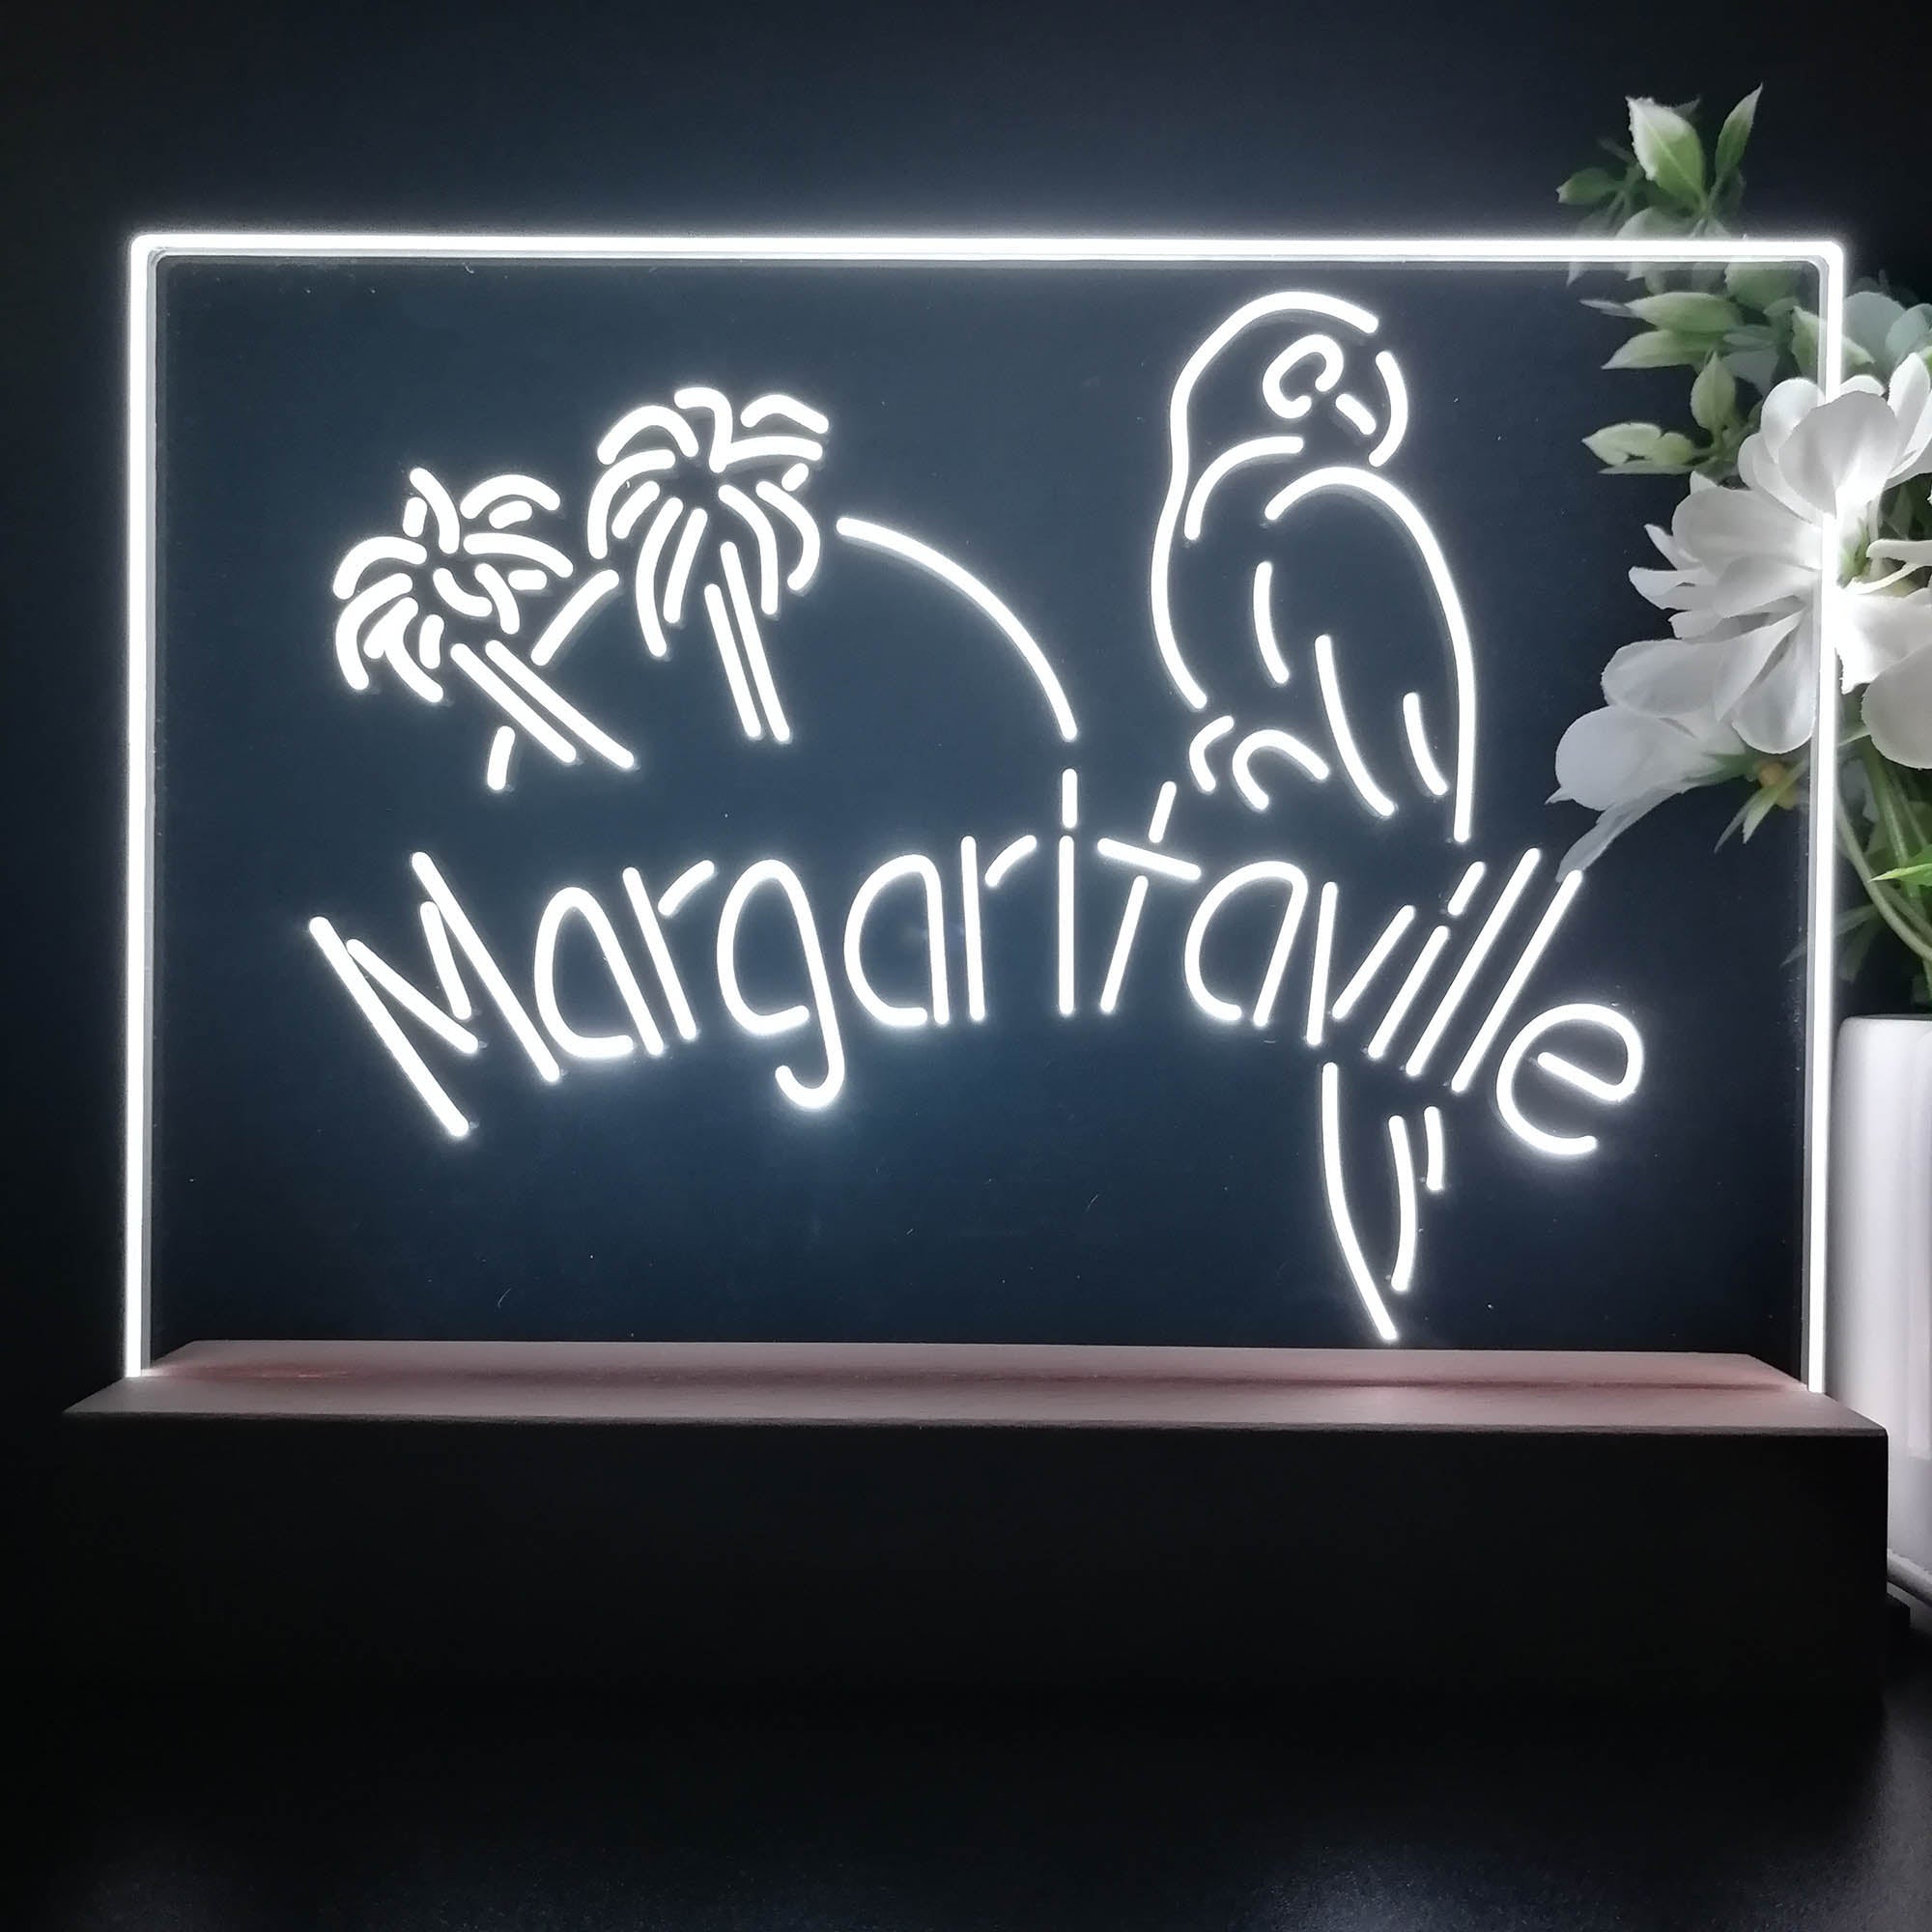 Jimmy Buffett Margaritaville Neon Sign Pub Bar Lamp